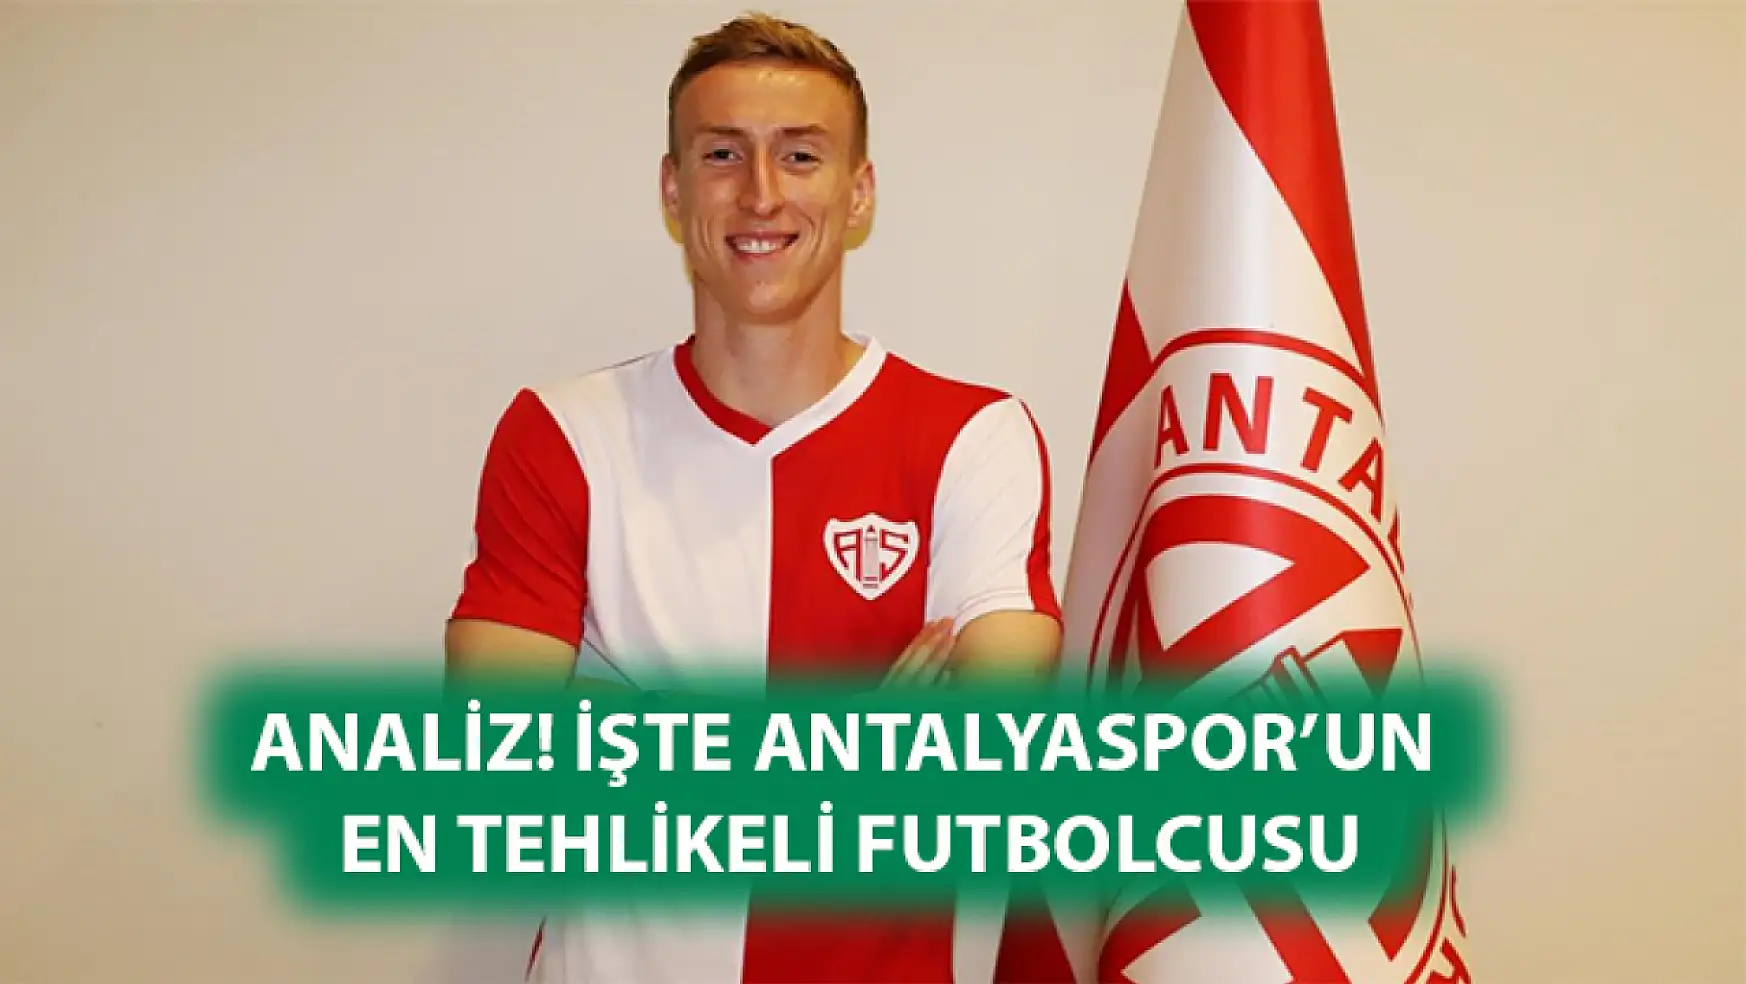 ANALİZ! İşte Antalyaspor'un en tehlikeli futbolcusu